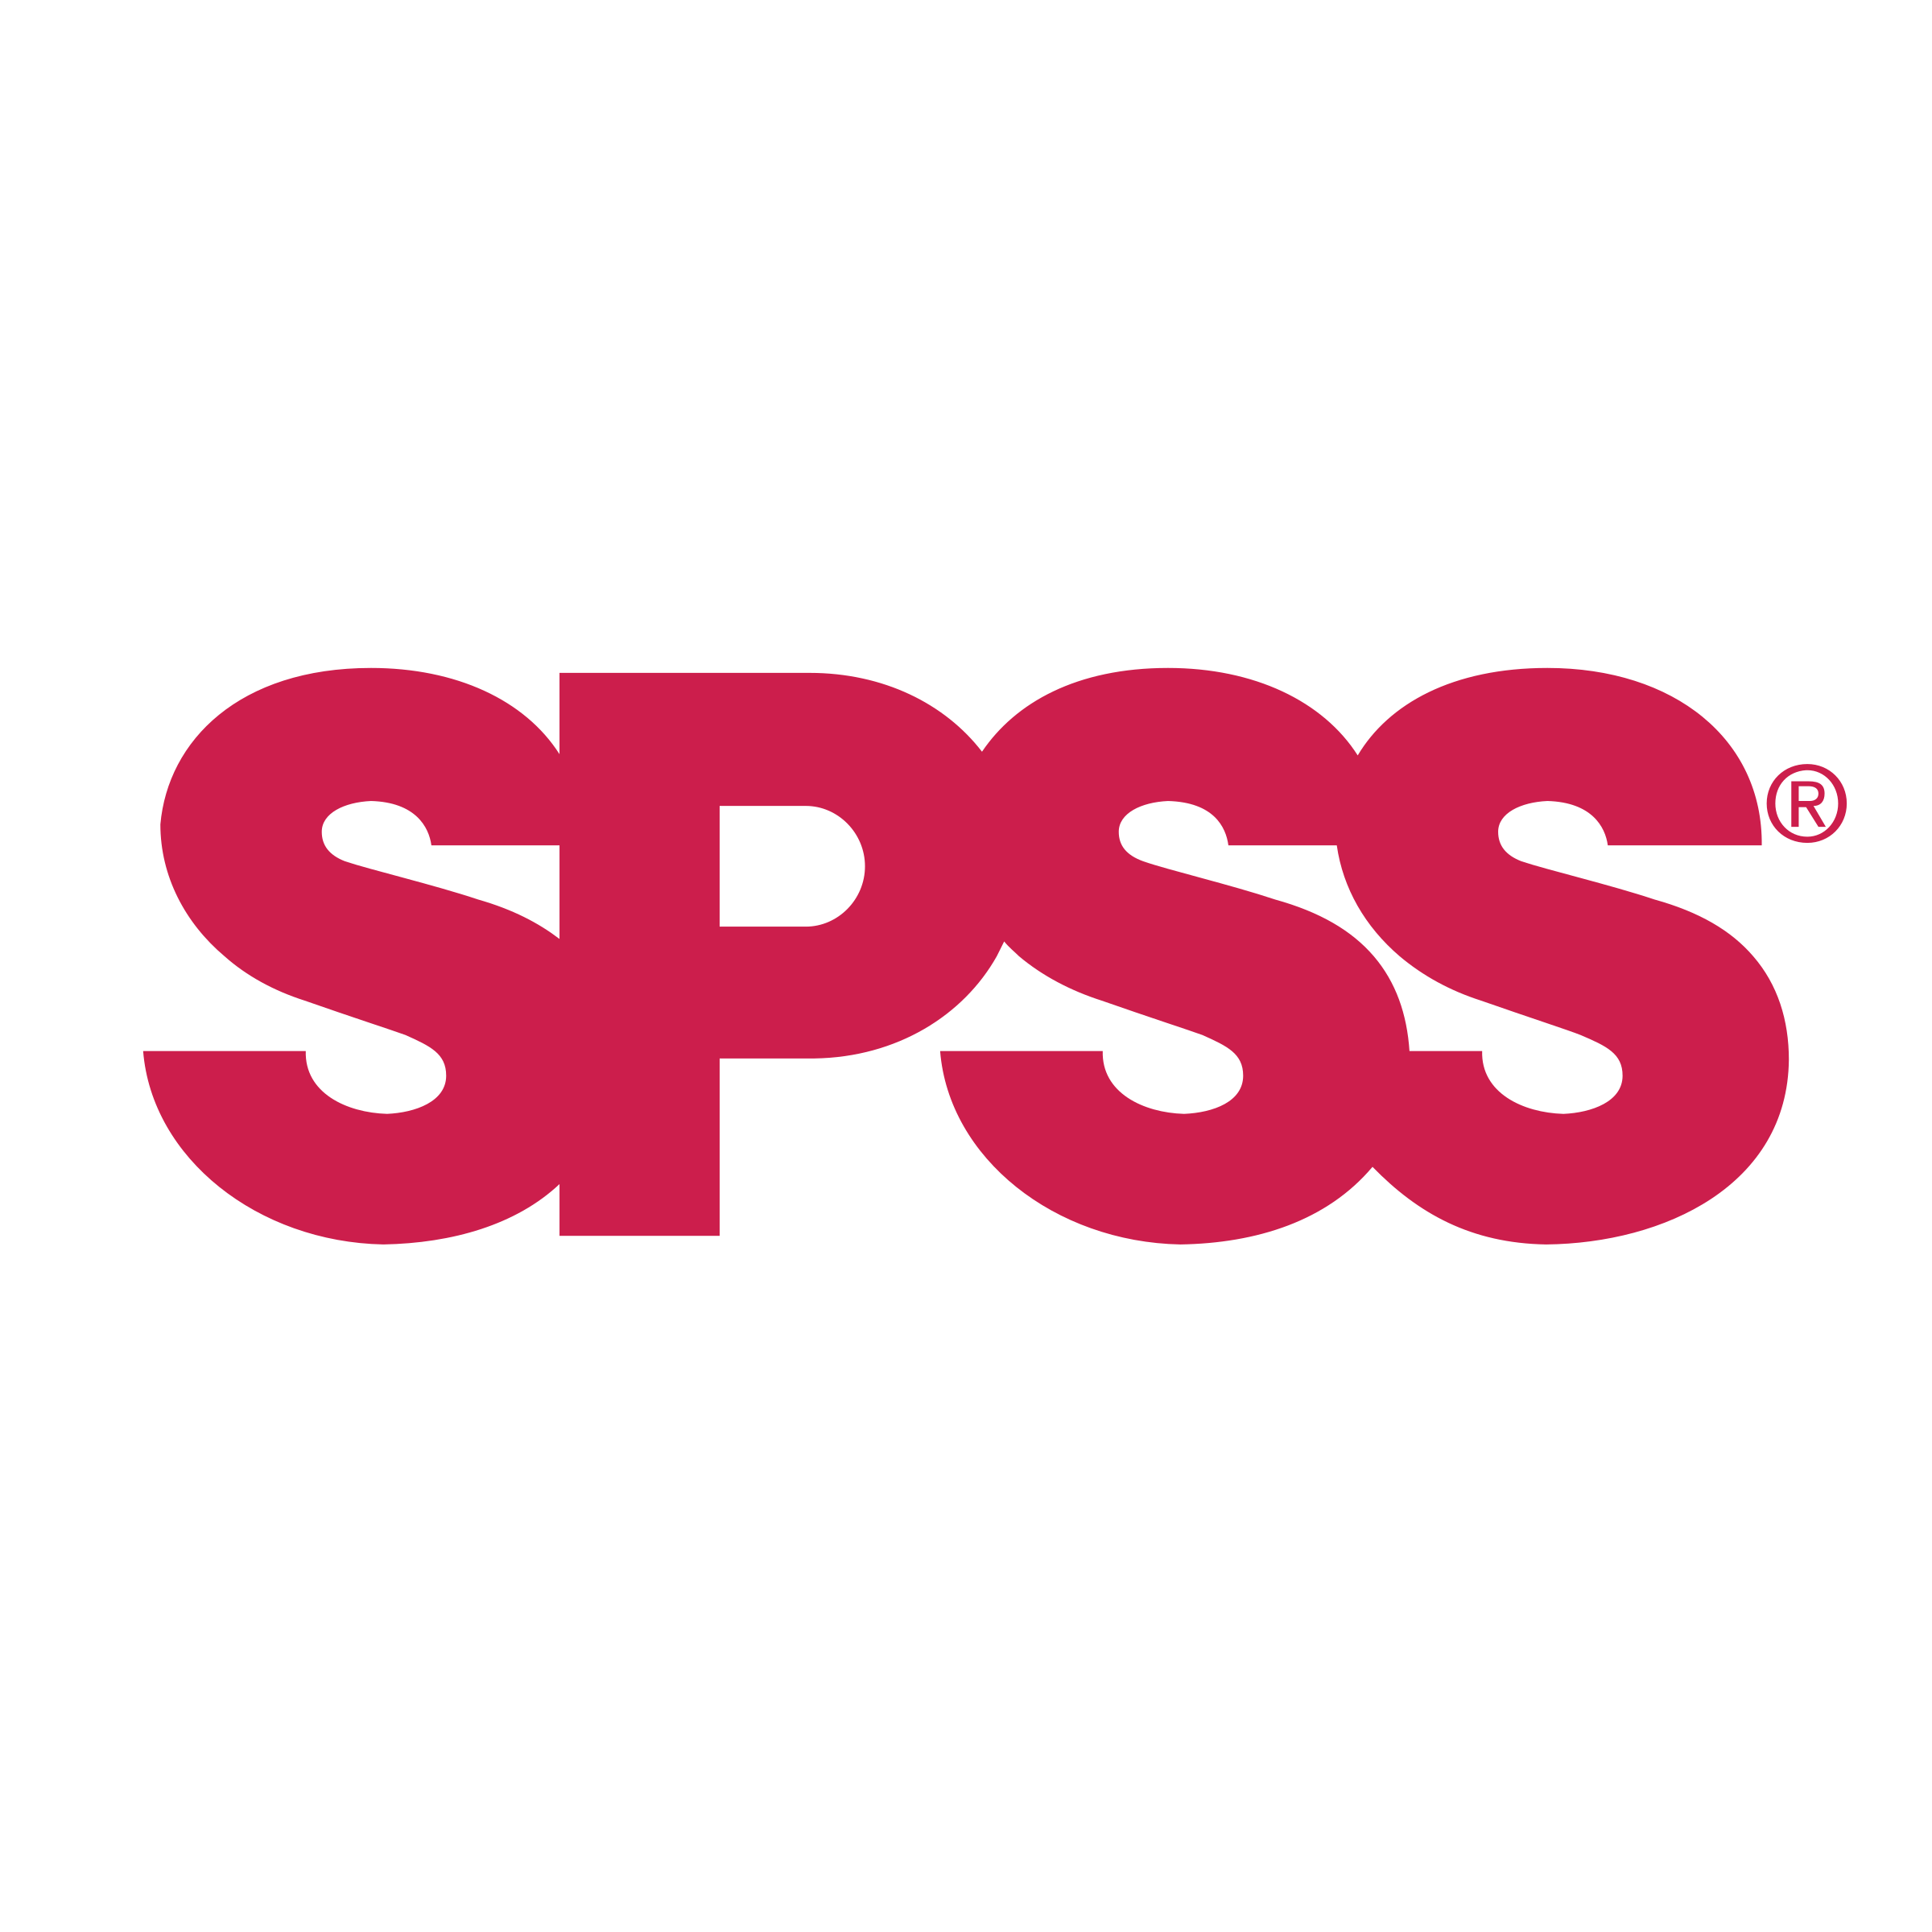 SPSS Logo - SPSS Logo PNG Transparent & SVG Vector - Freebie Supply